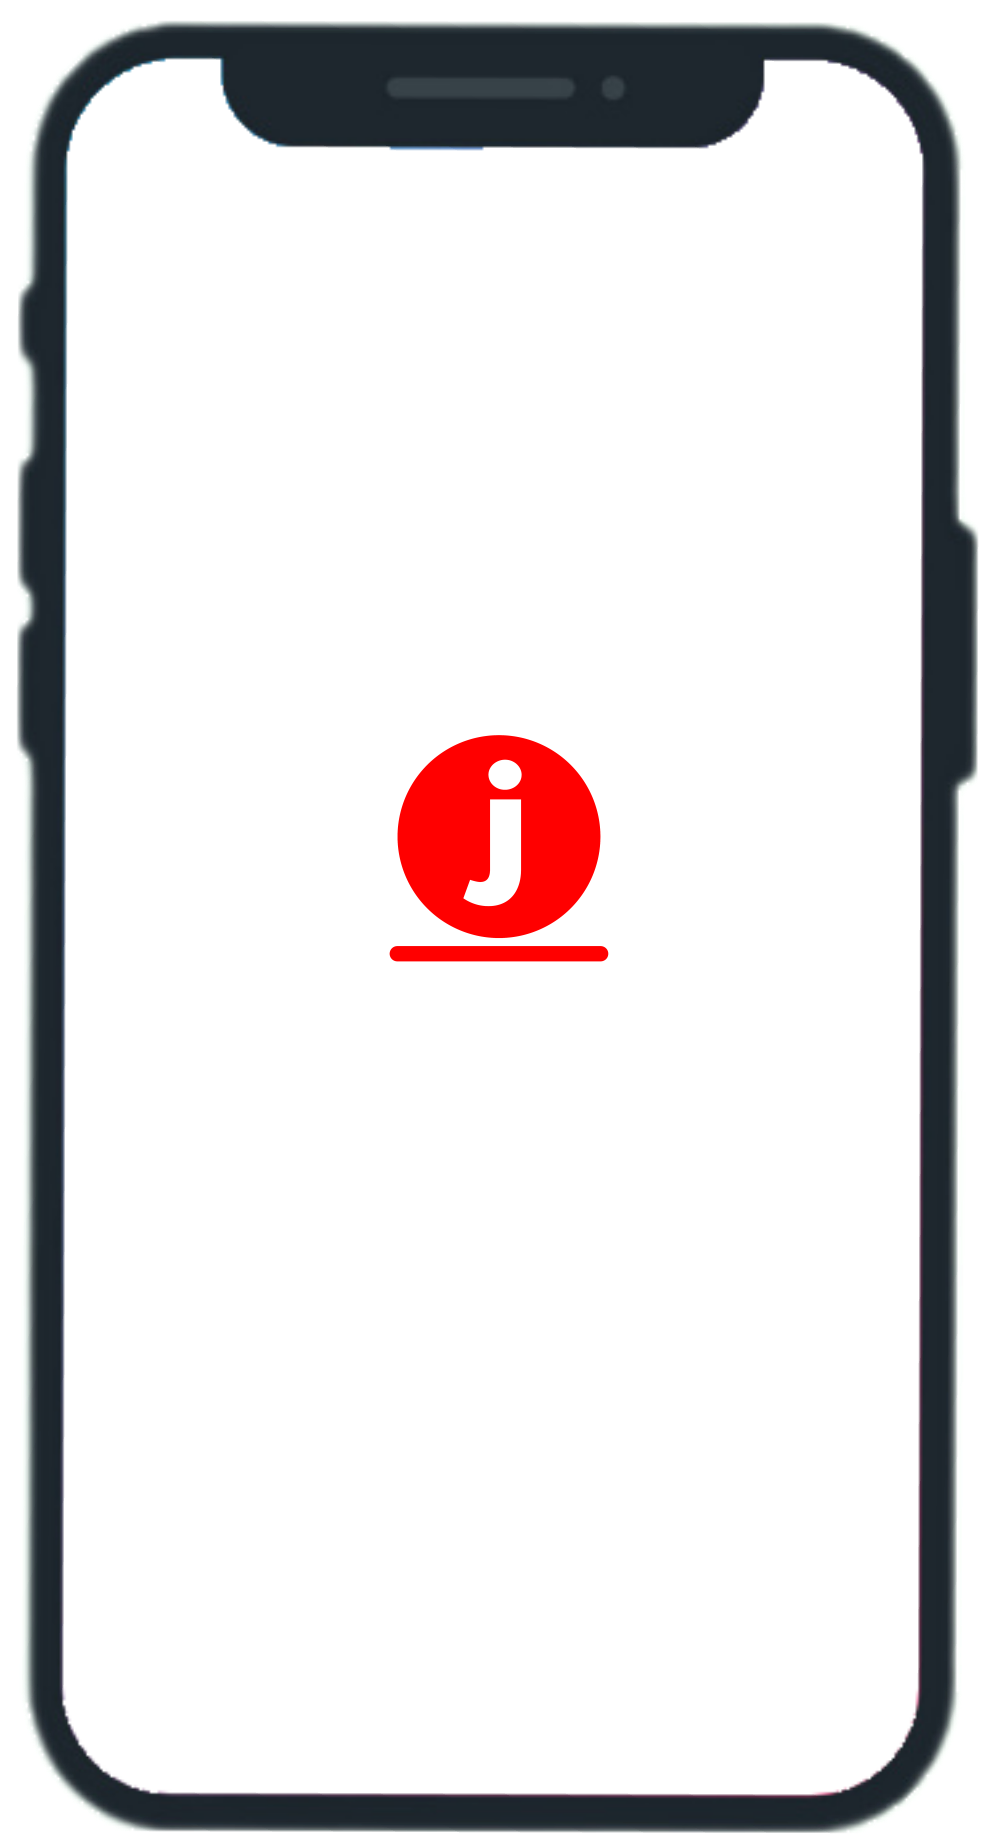 Jconnect Zimbabwe